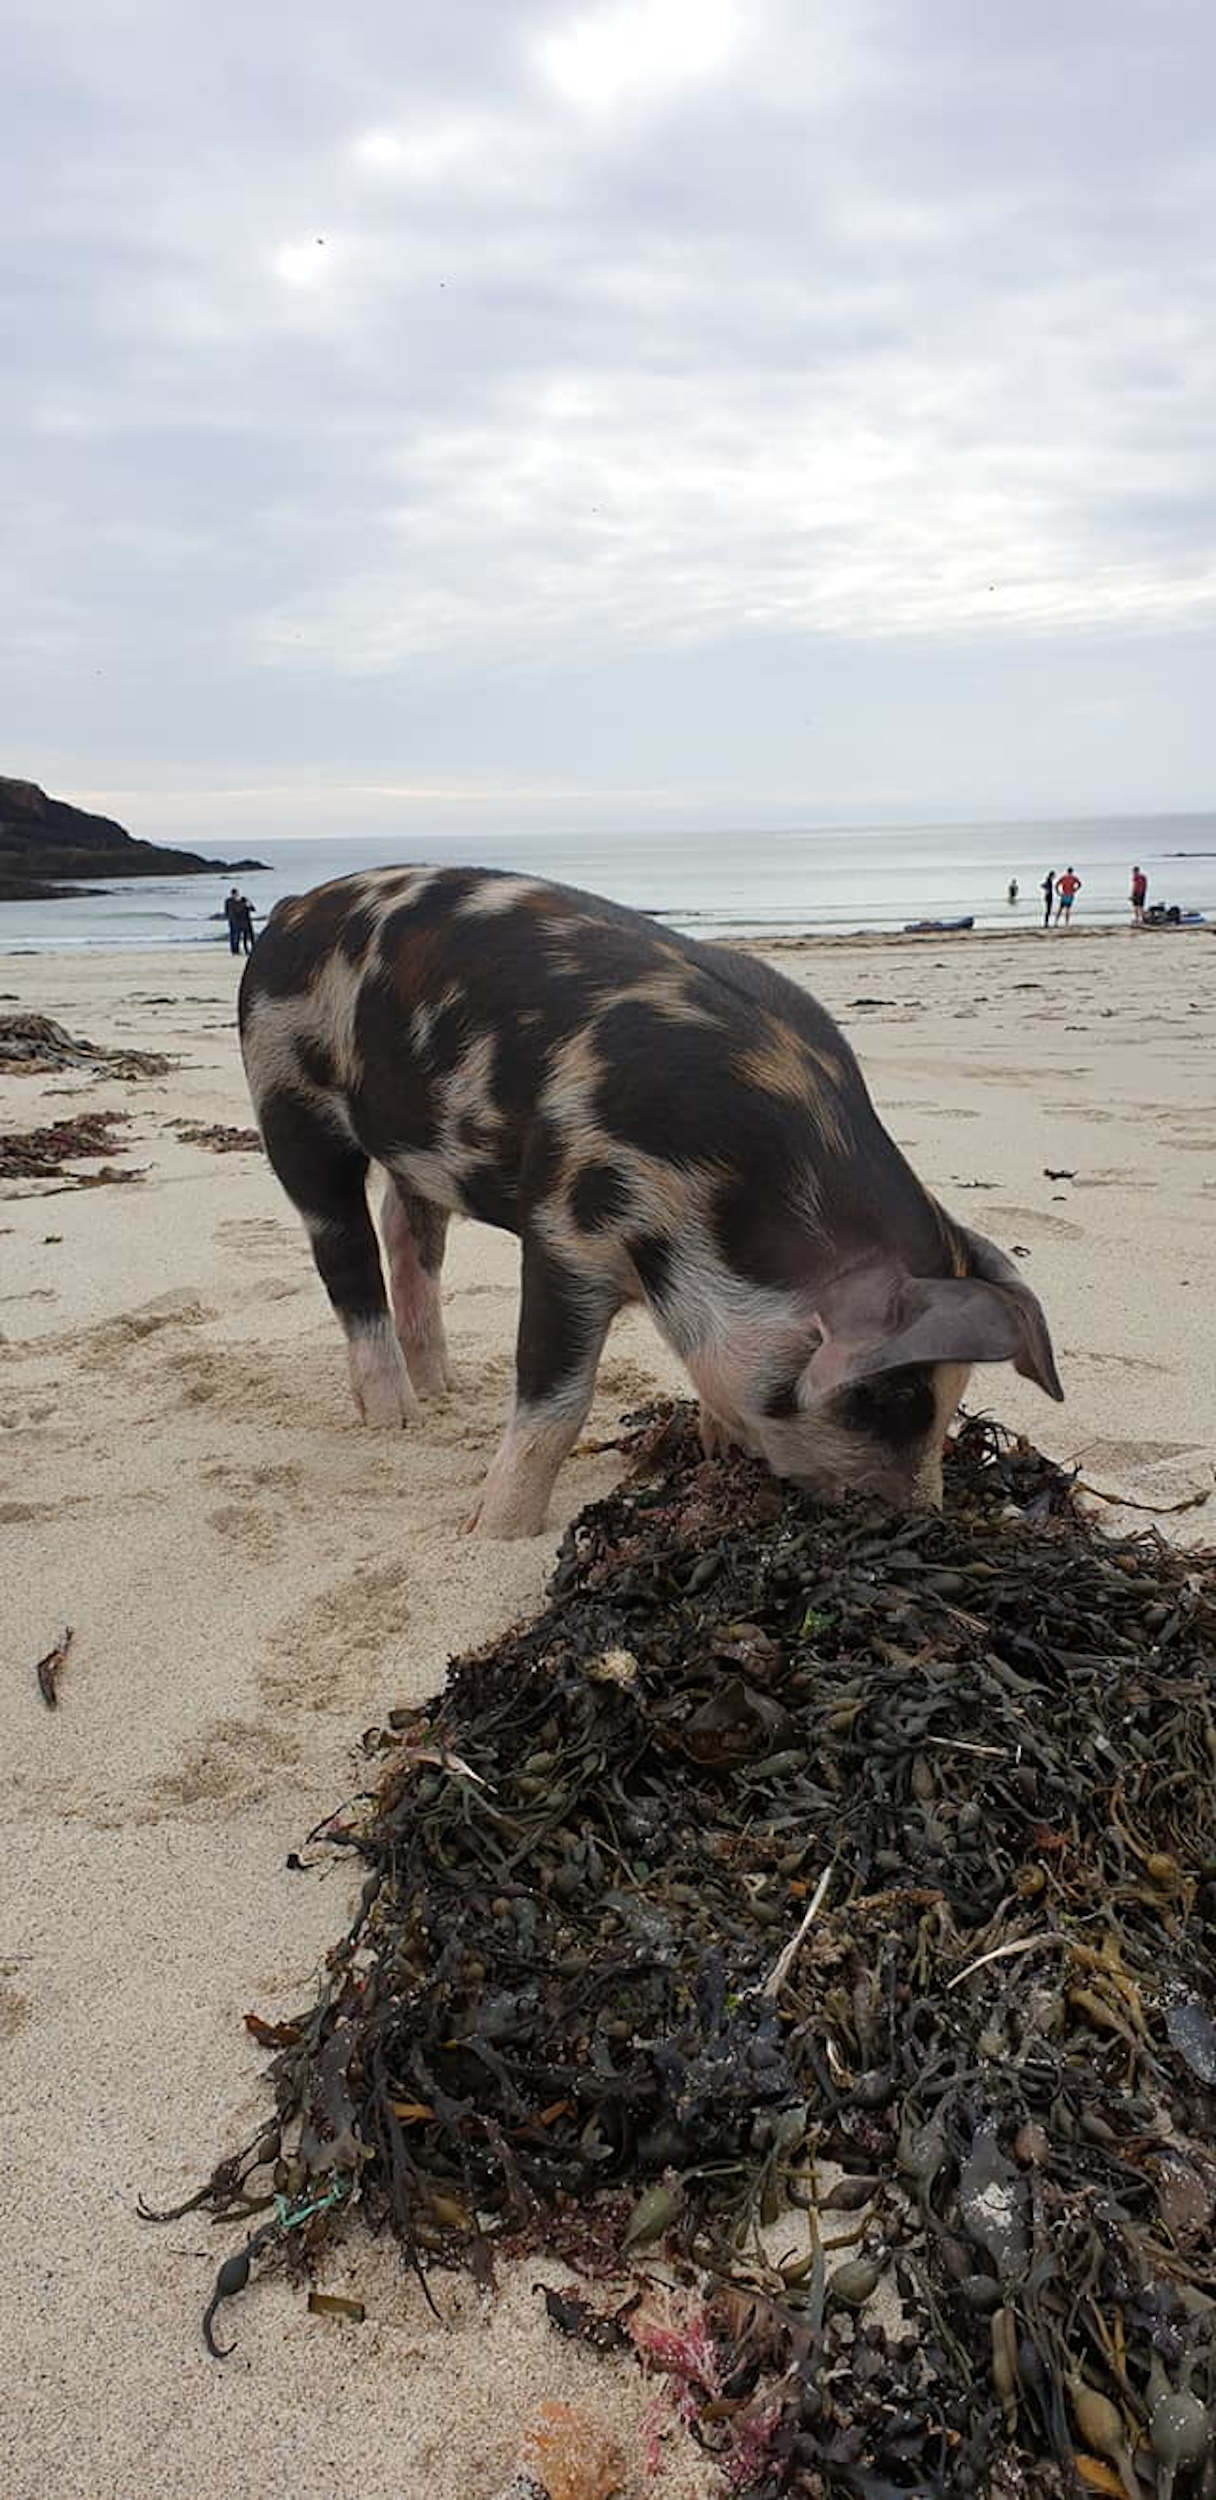 Pig with seaweed